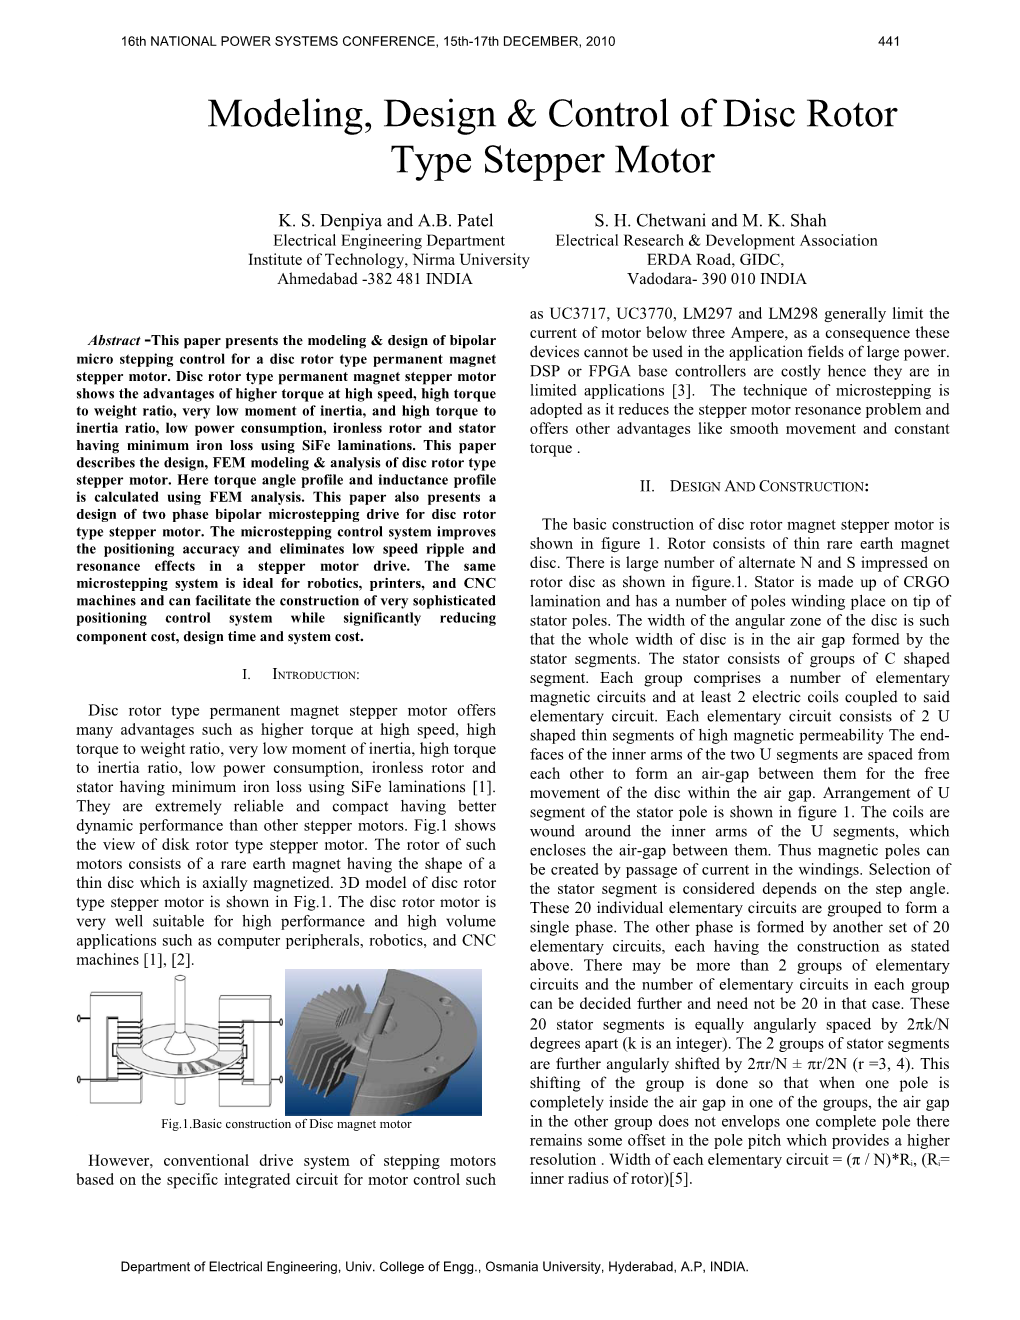 Modeling, Design & Control of Disc Rotor Type Stepper Motor